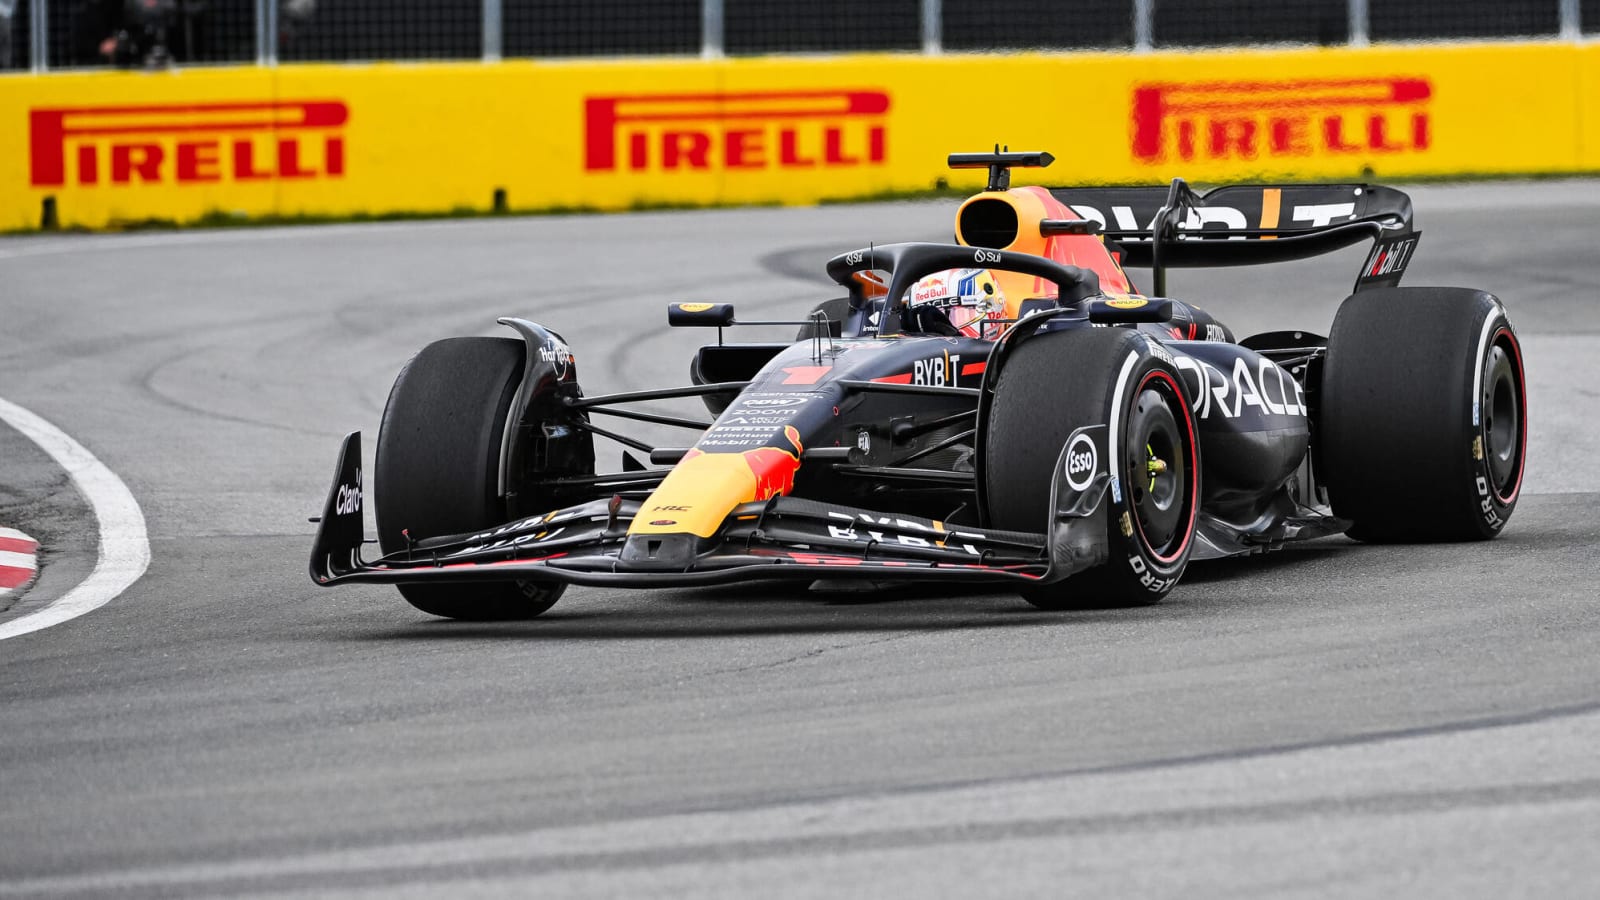 Max Verstappen clinches third straight F1 world championship